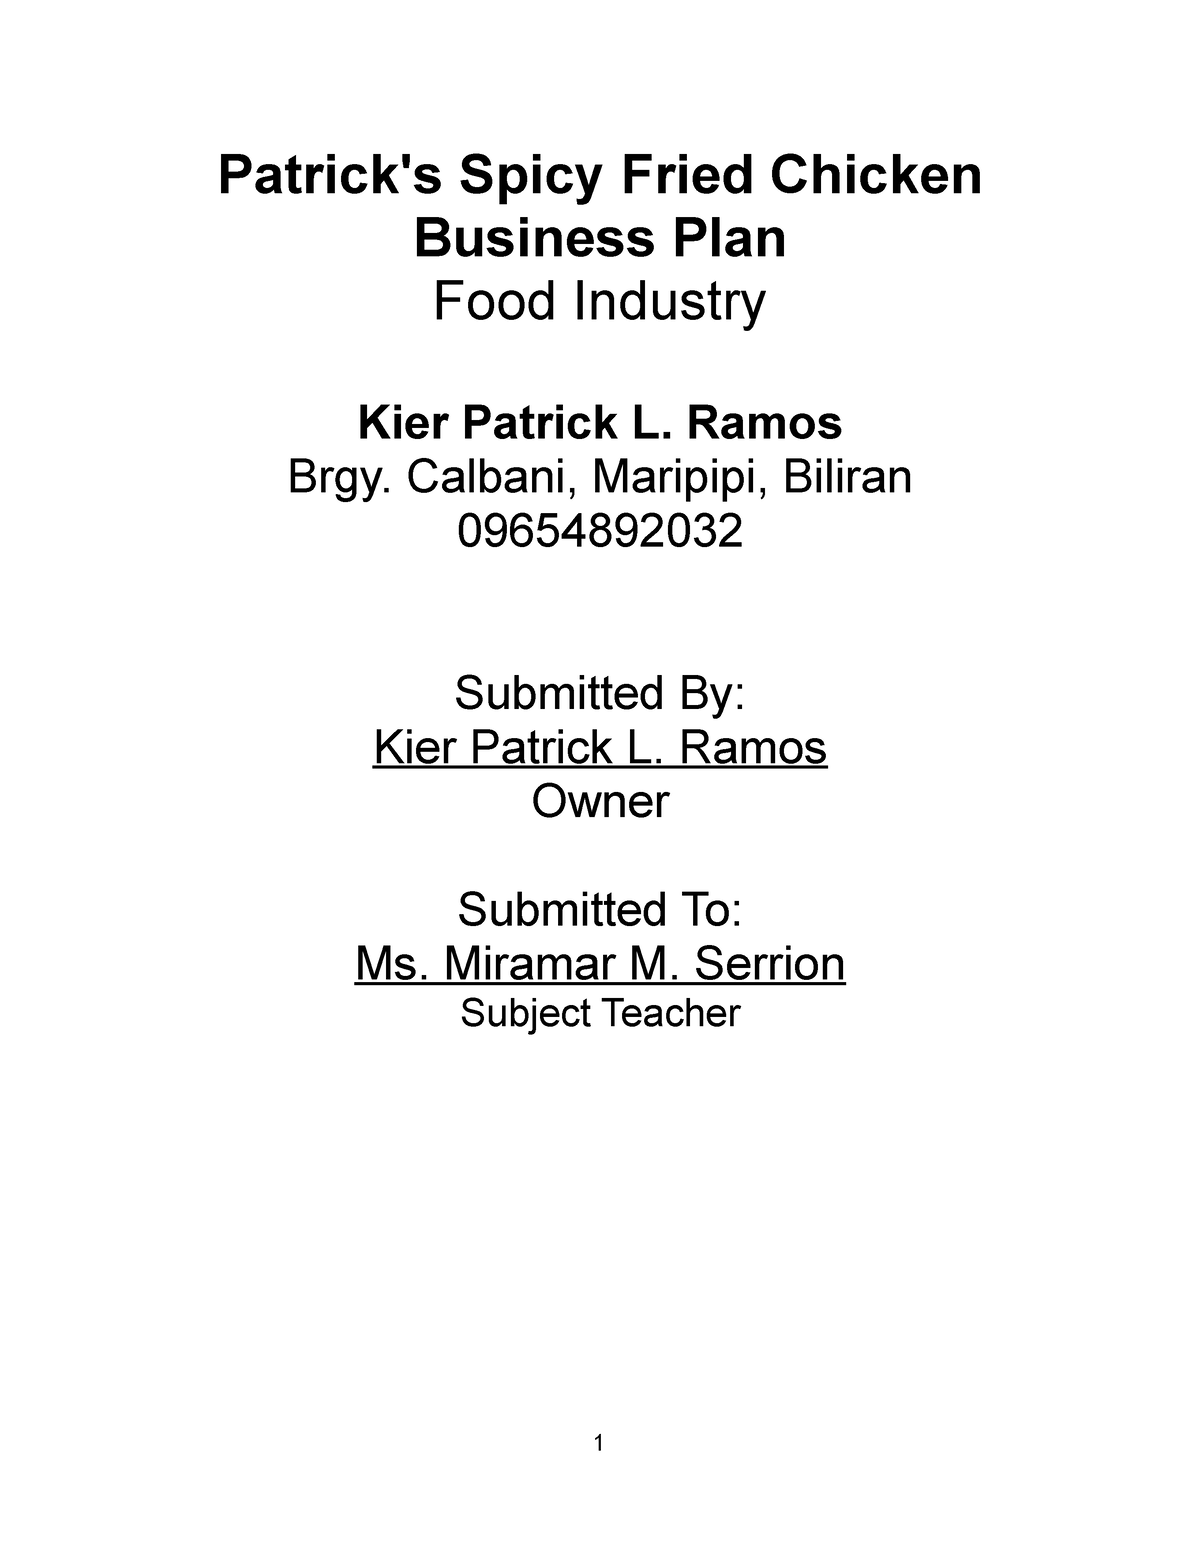 fried chicken business plan philippines